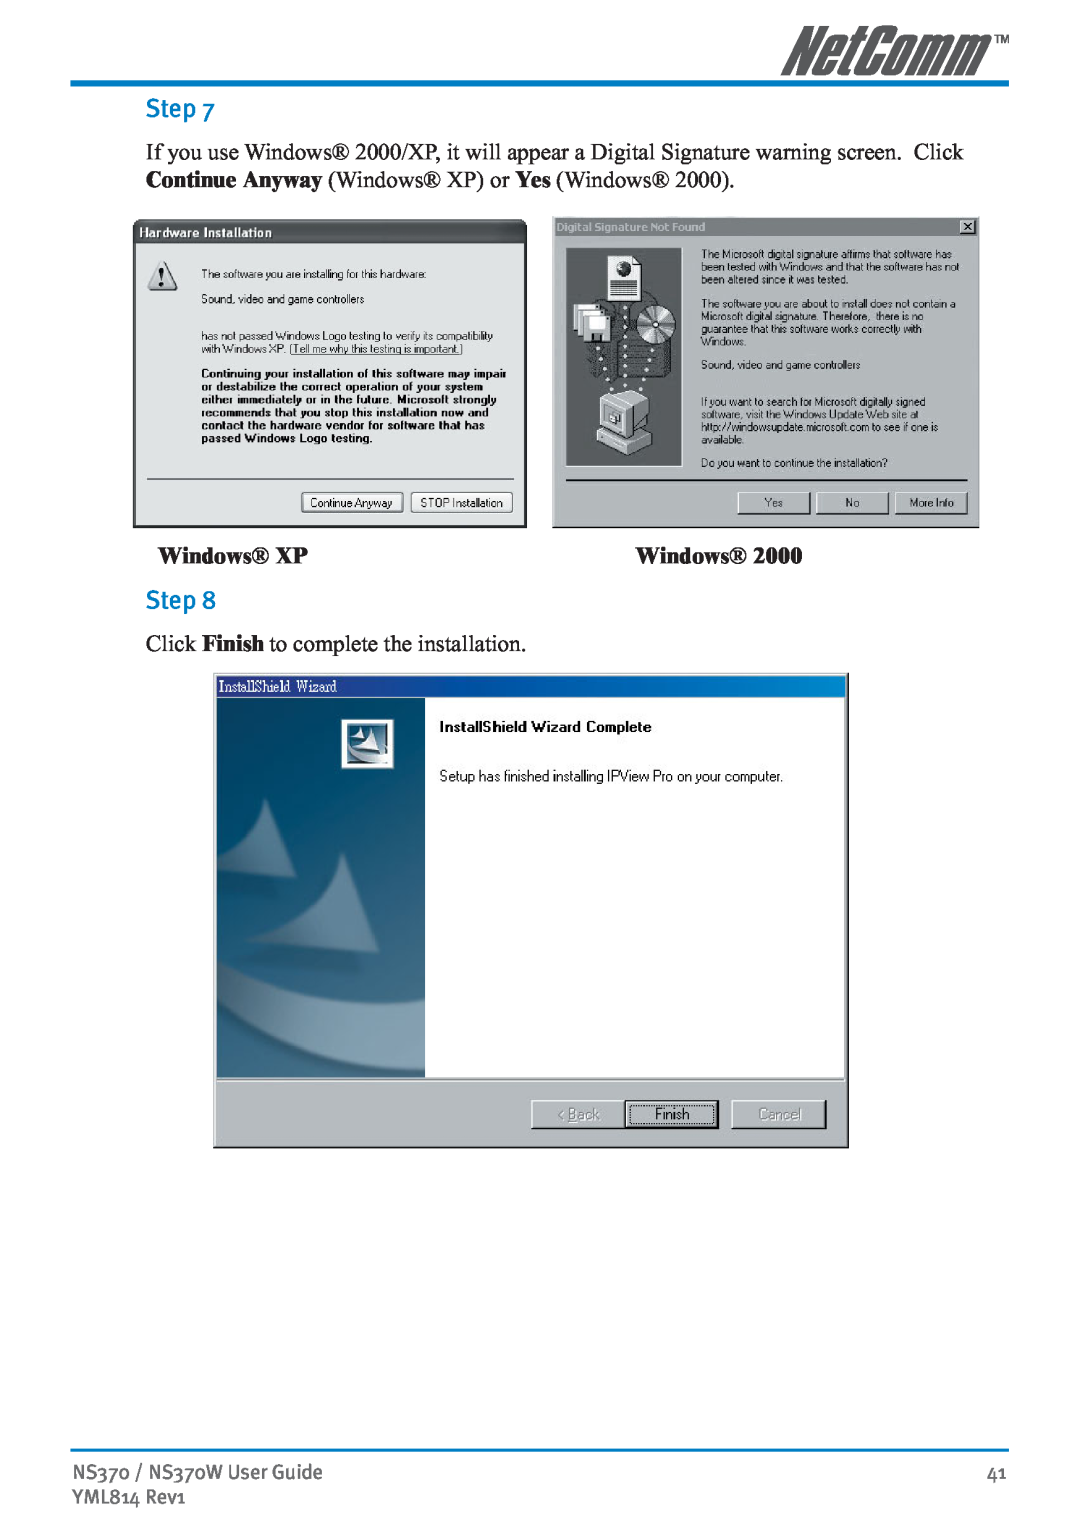 NetComm manual Windows XP, Step, NS370 / NS370W User Guide, YML814 Rev1 